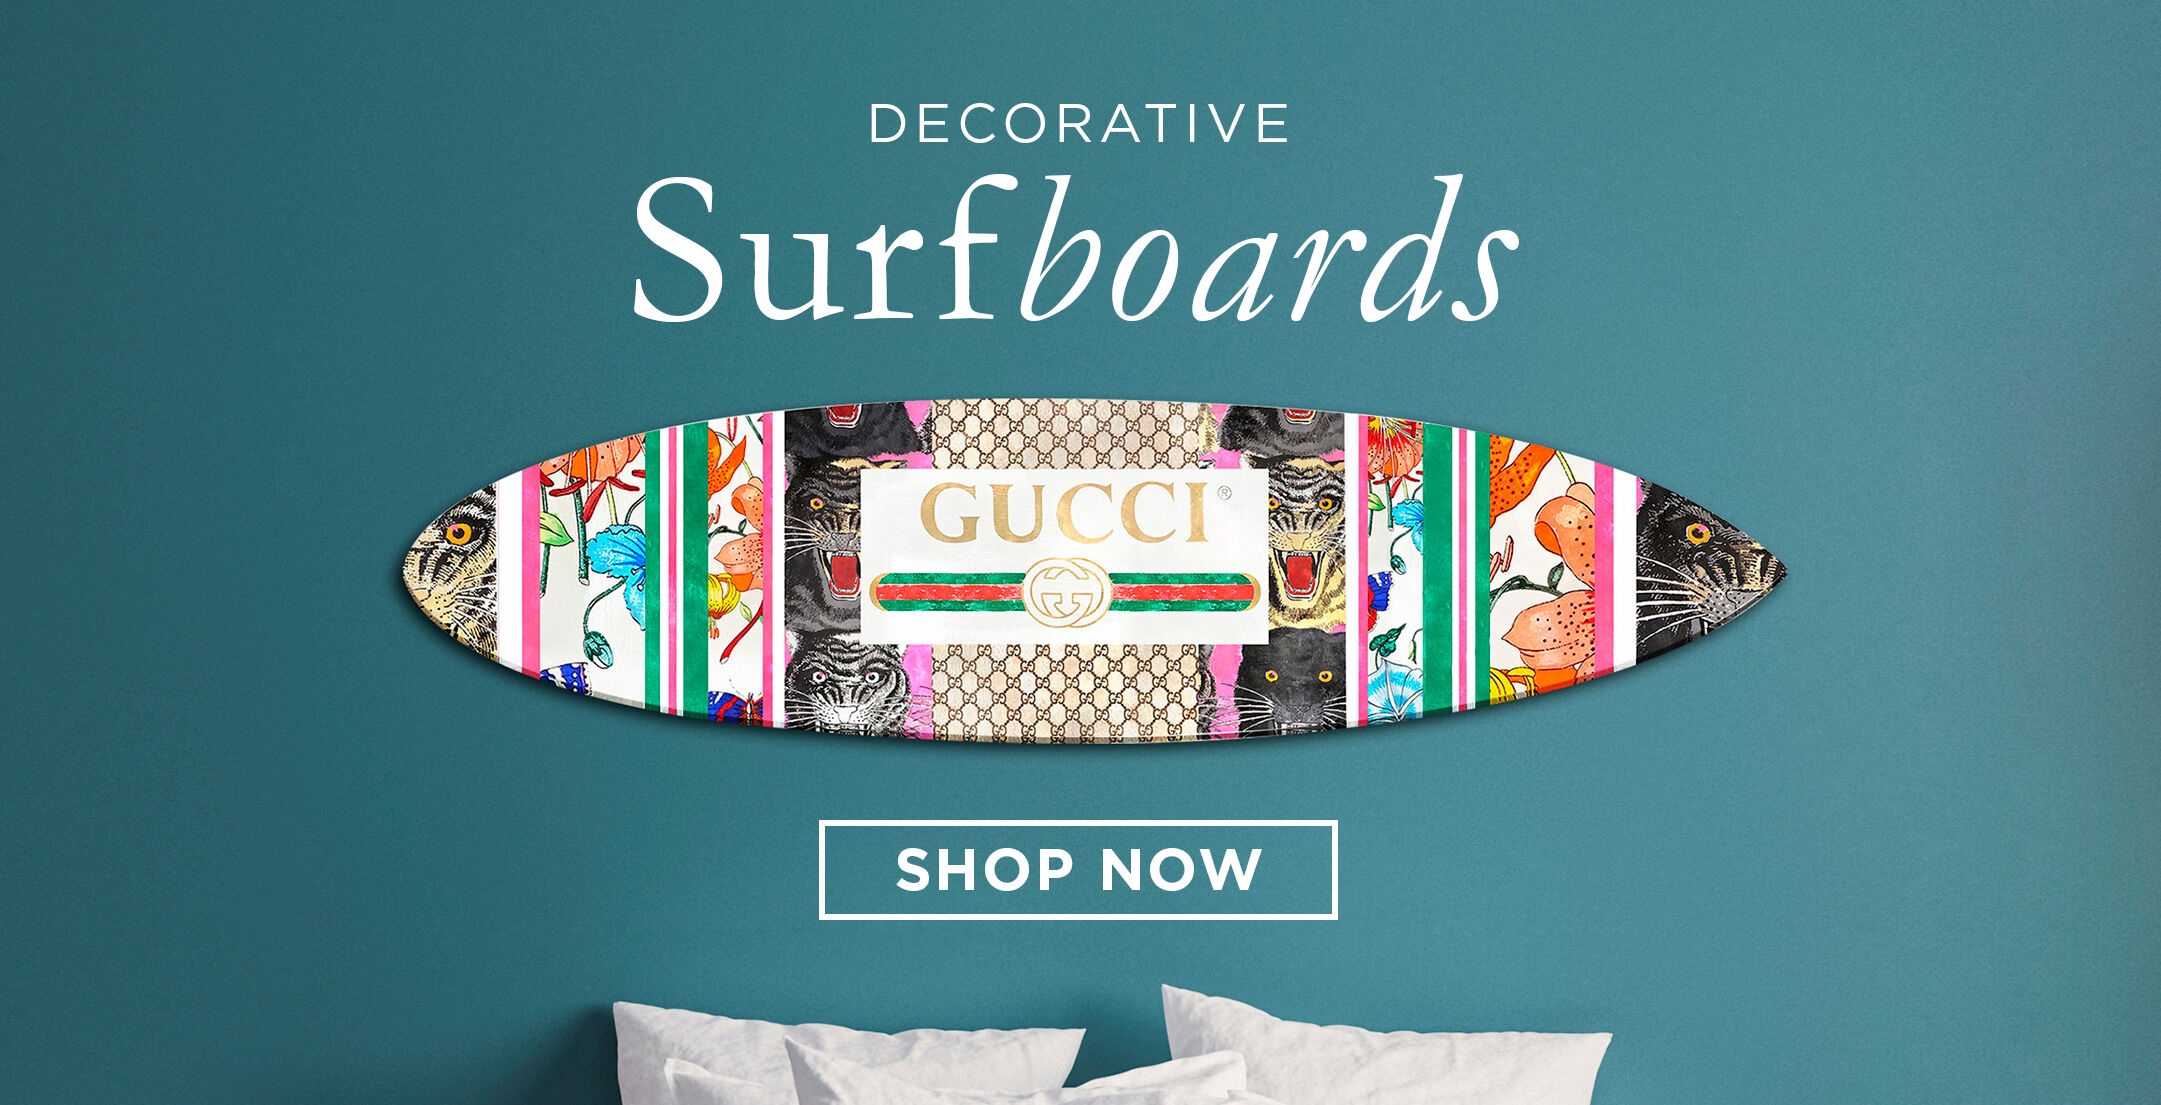 Decorative Surfboards